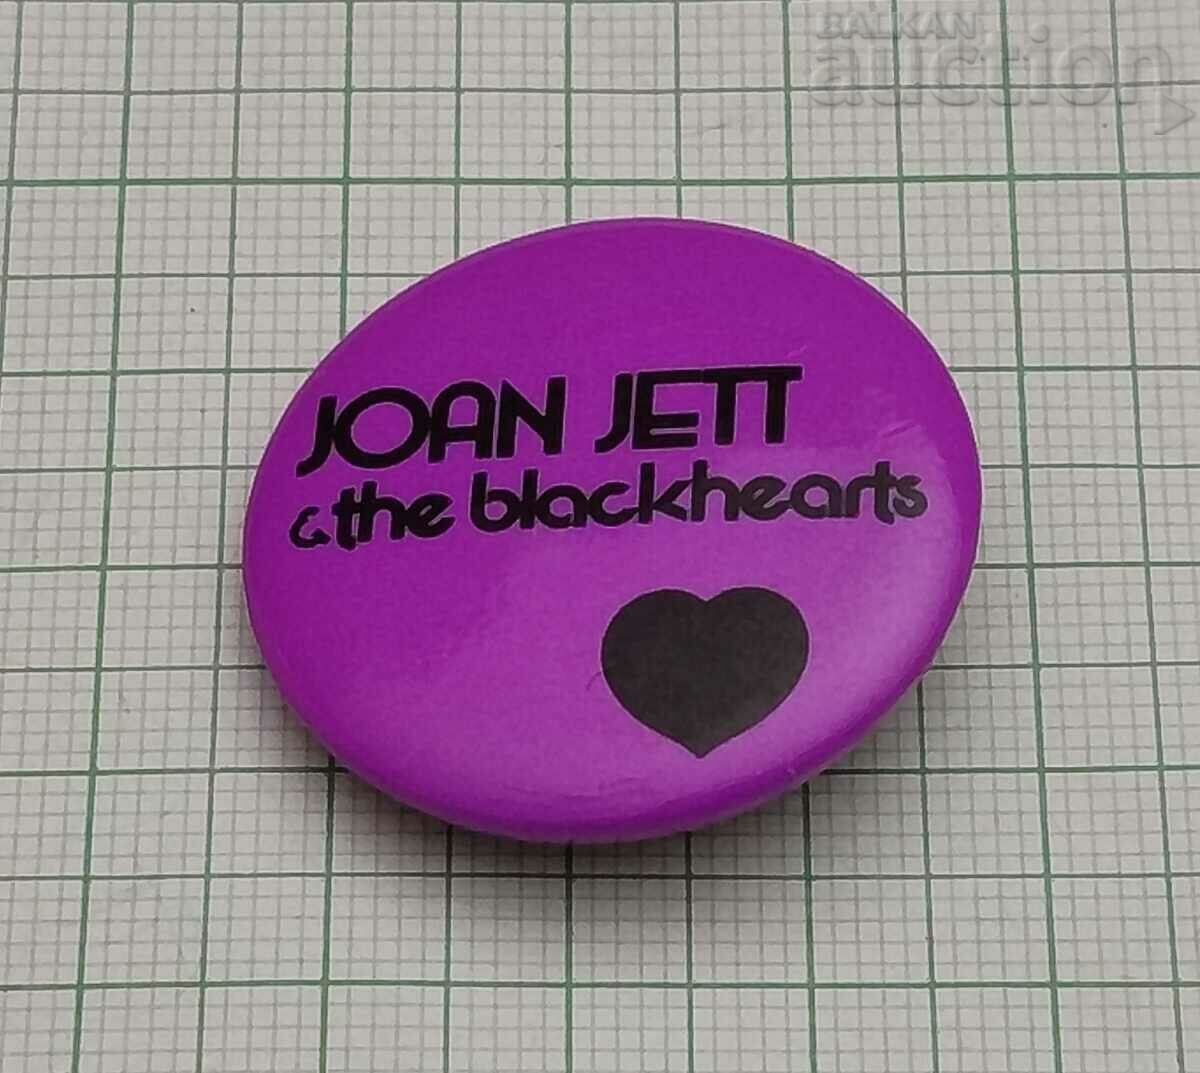 JOAN JETT THE BLACKHEARTS ROCK MUSIC USA BADGE